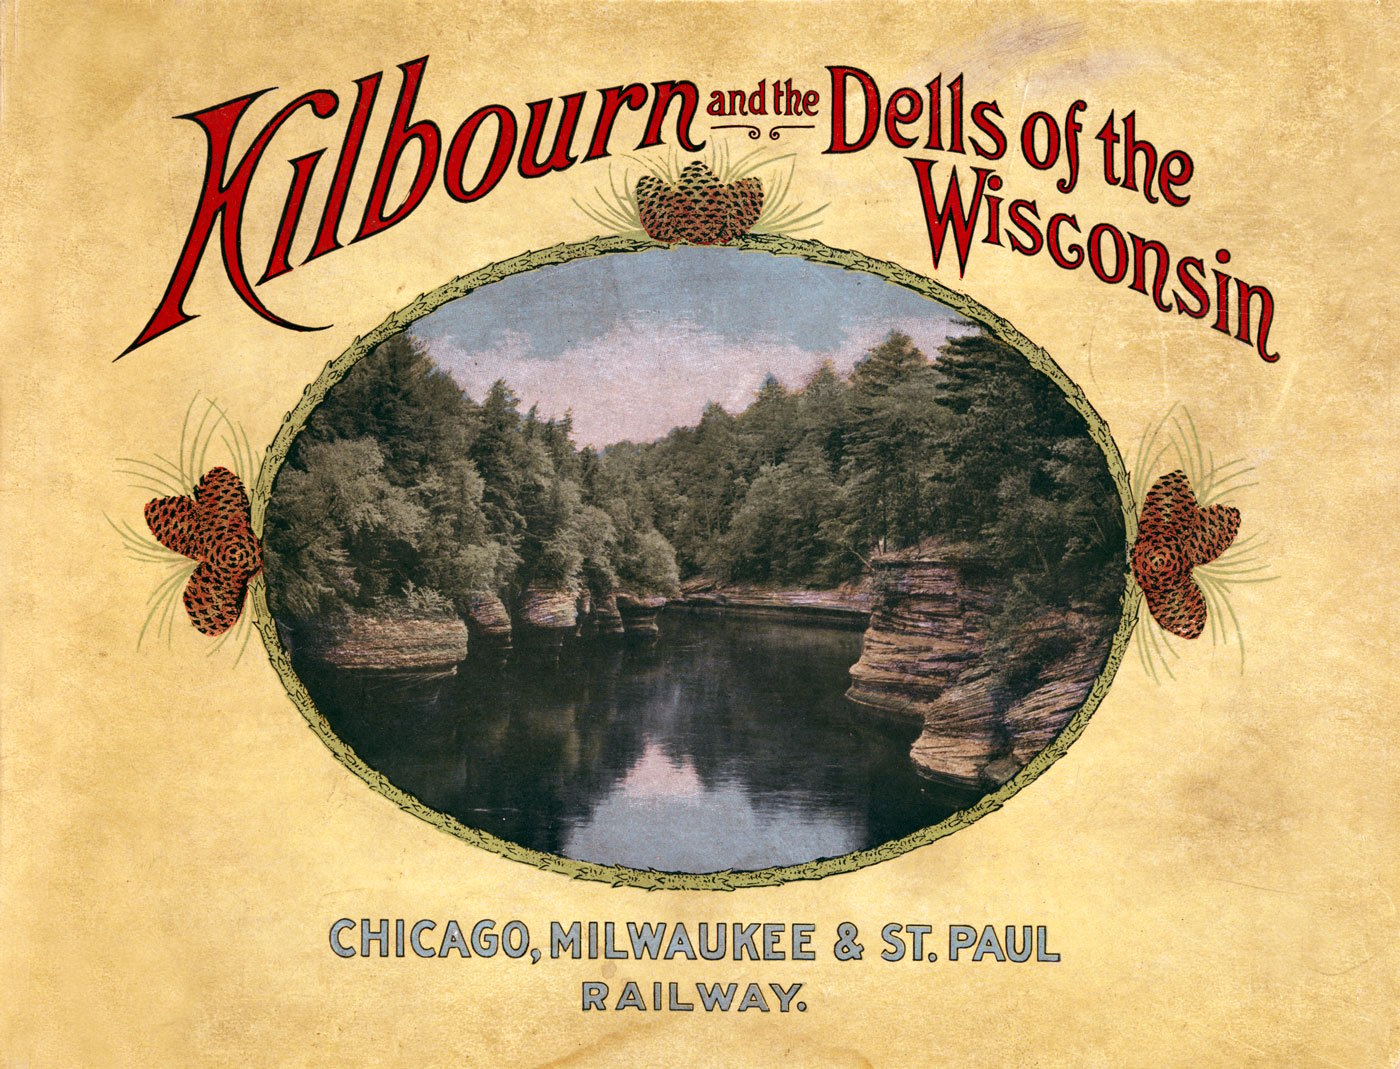 Advertisement for the Chicago, Milwaukee, & St. Paul Railway, circa 1906